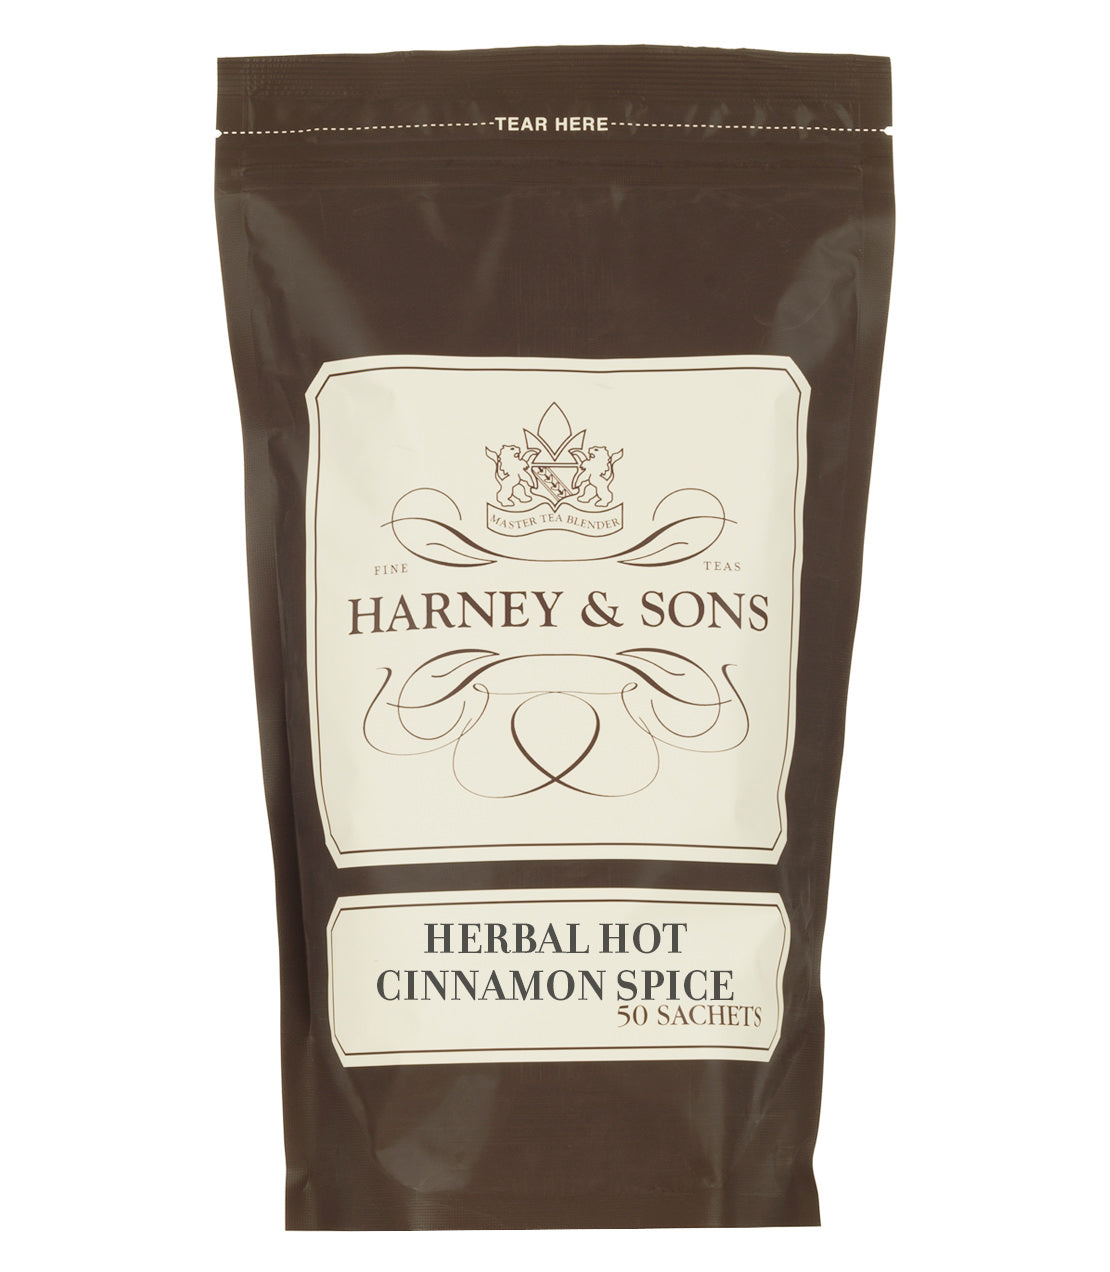 Herbal Hot Cinnamon Spice, Bag of 50 Sachets - Sachets Bag of 50 Sachets - Harney & Sons Fine Teas